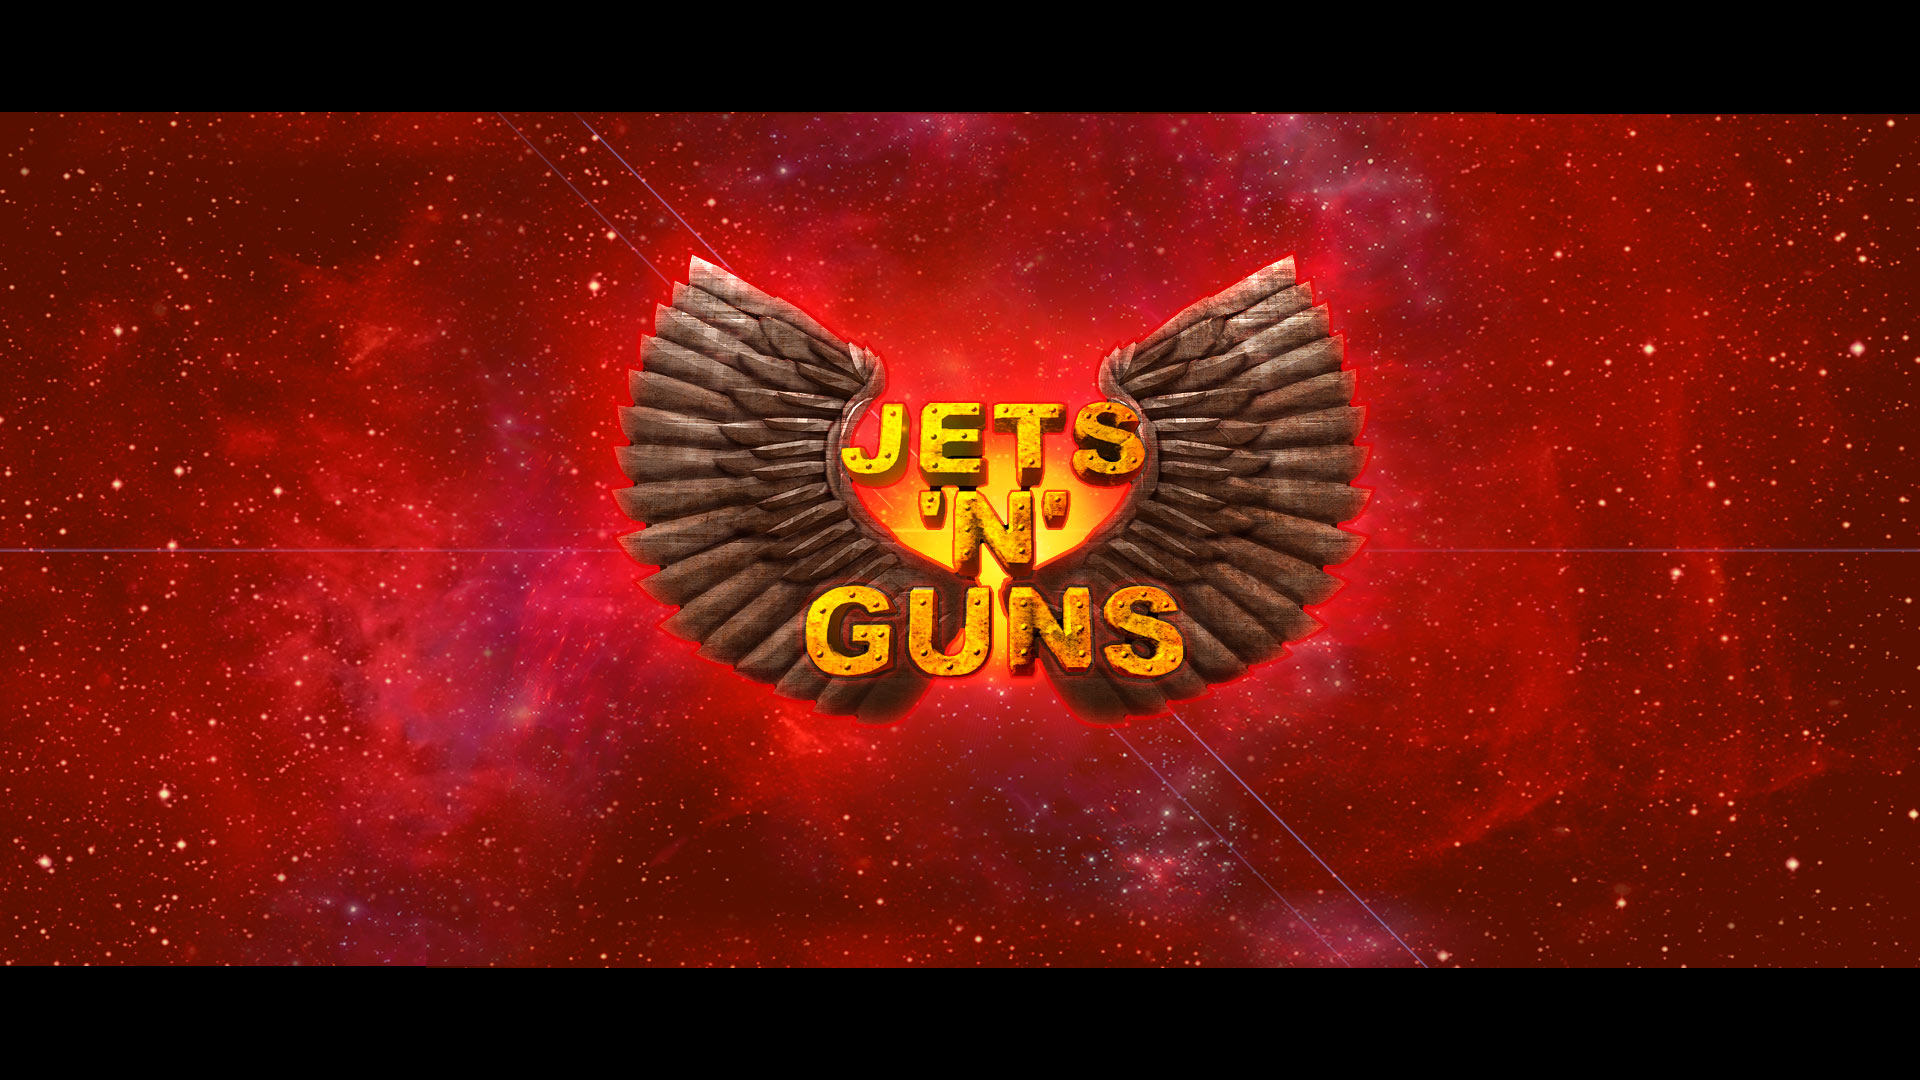 Jets'n'Guns Gold Backgrounds, Compatible - PC, Mobile, Gadgets| 1920x1080 px